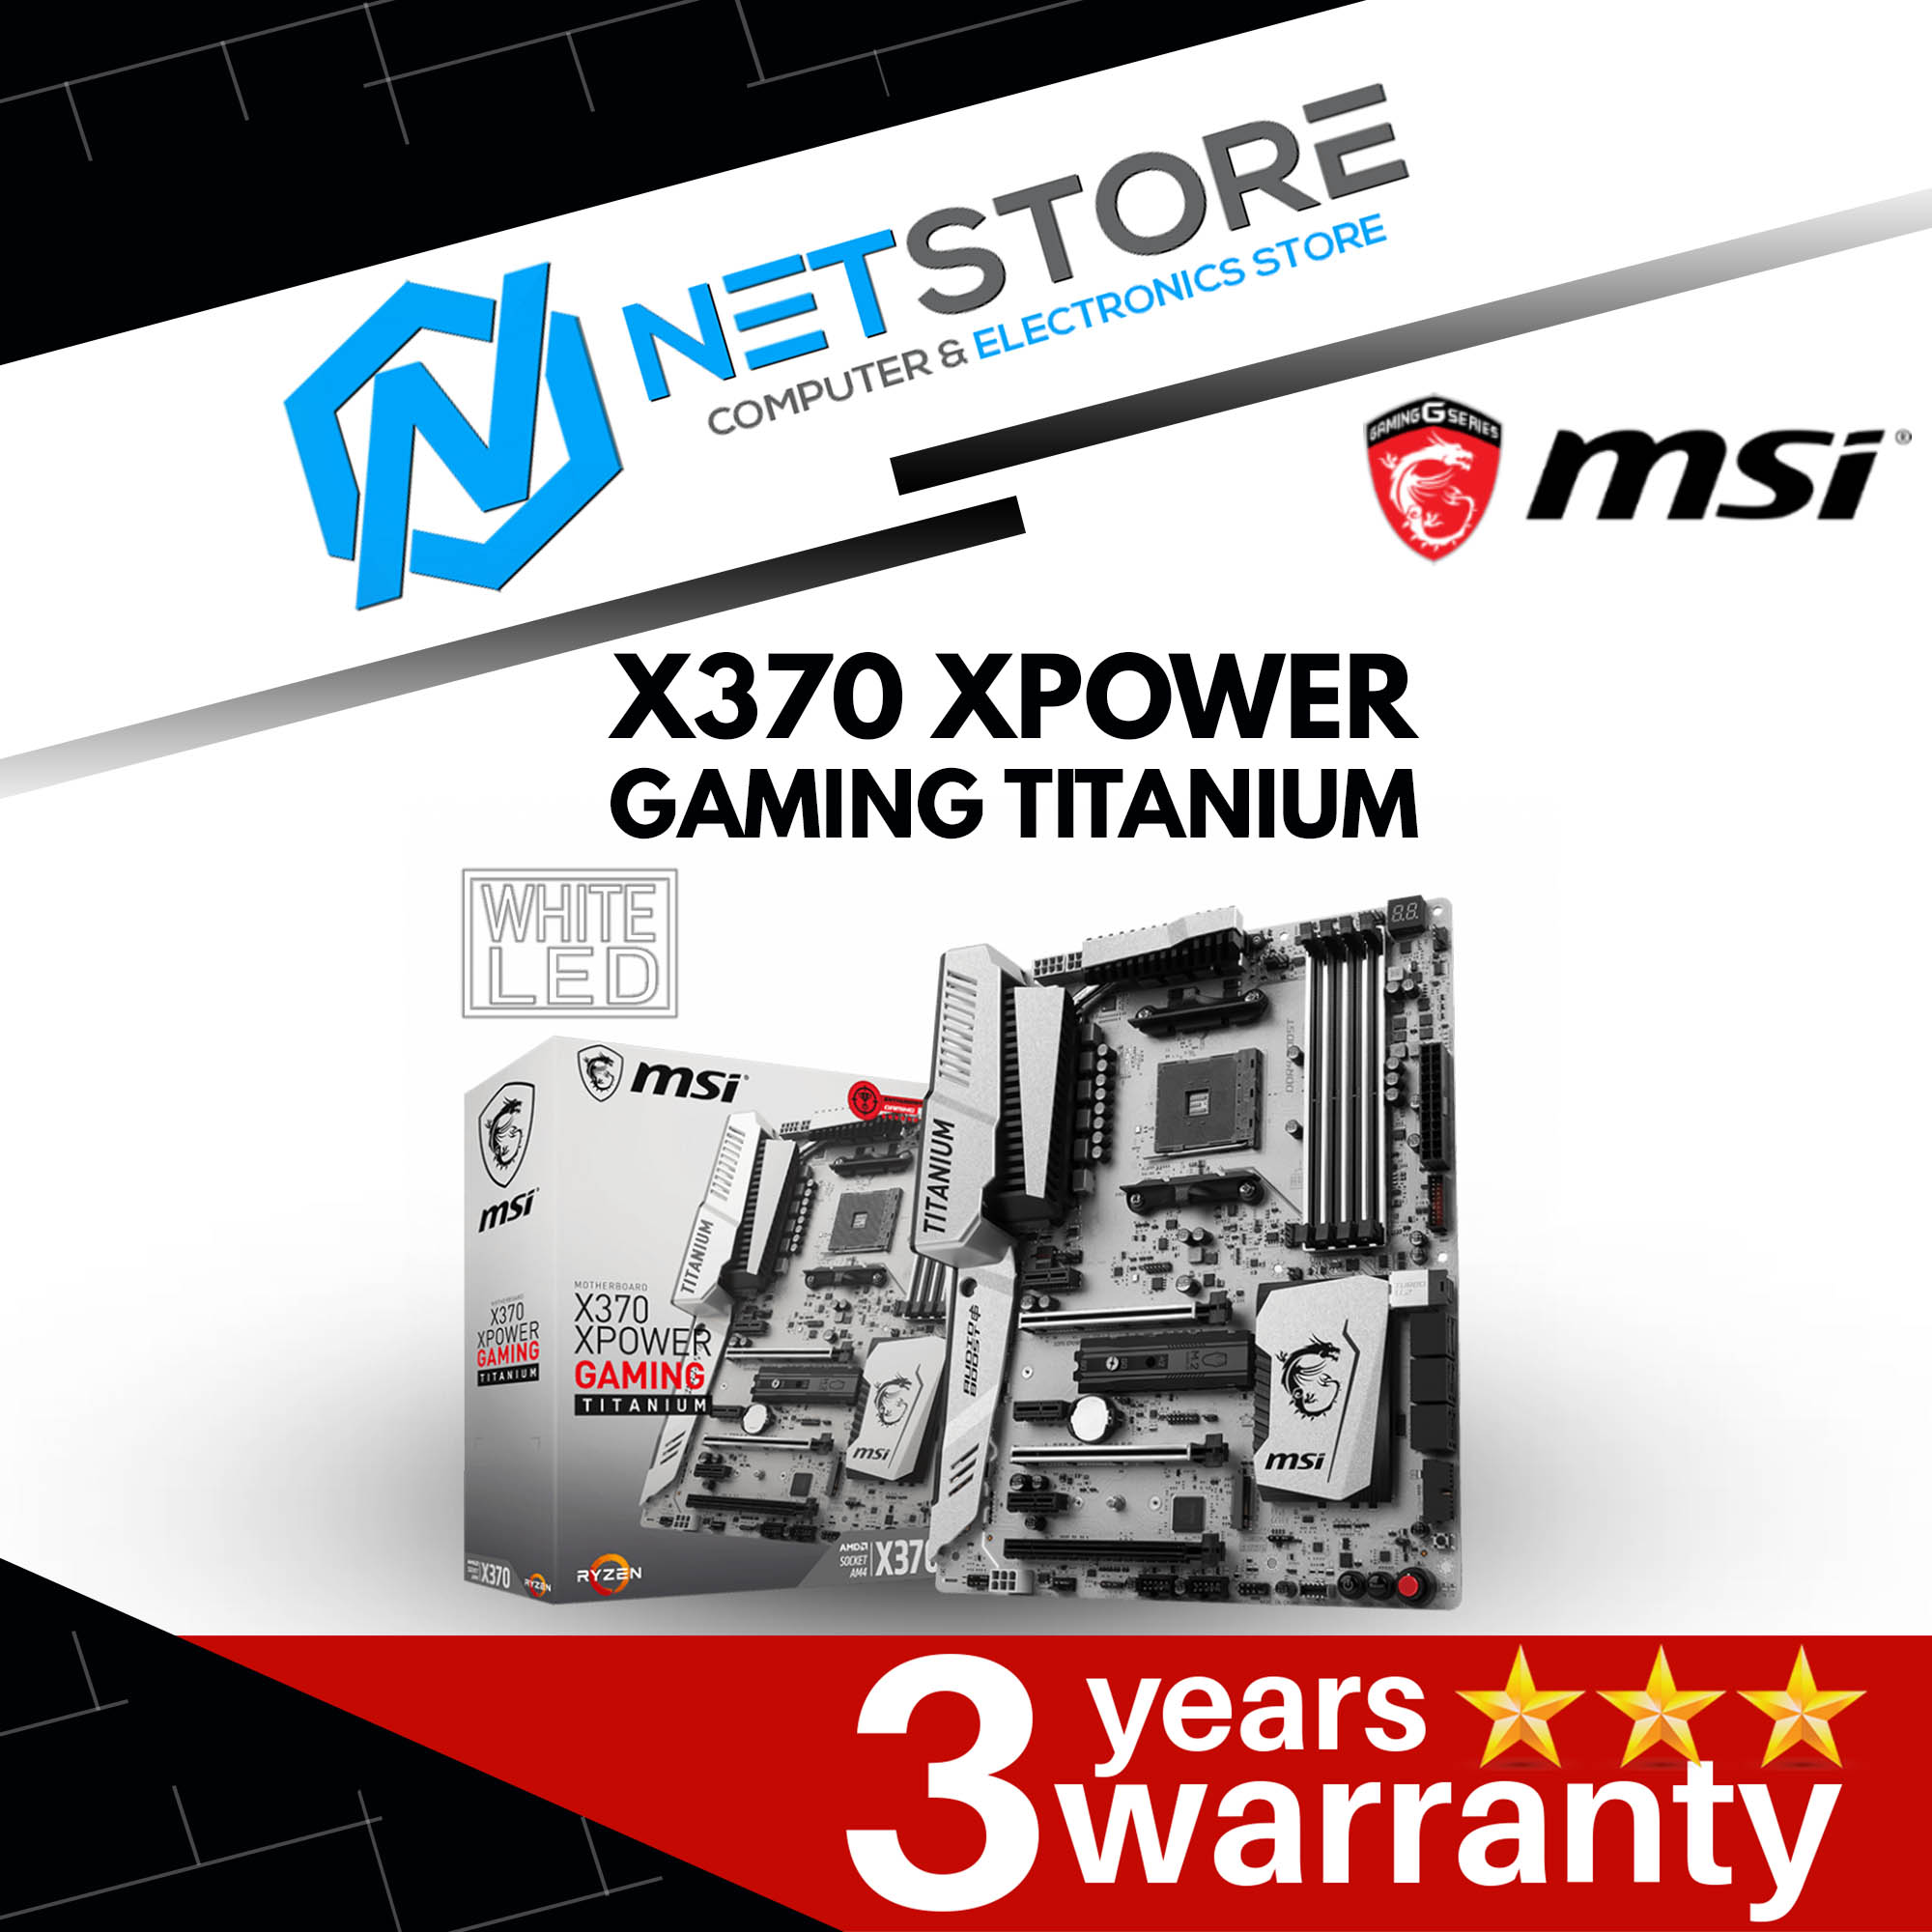 MSI X370 XPOWER GAMING TITANIUM DDR4 ATX MOTHERBOARD